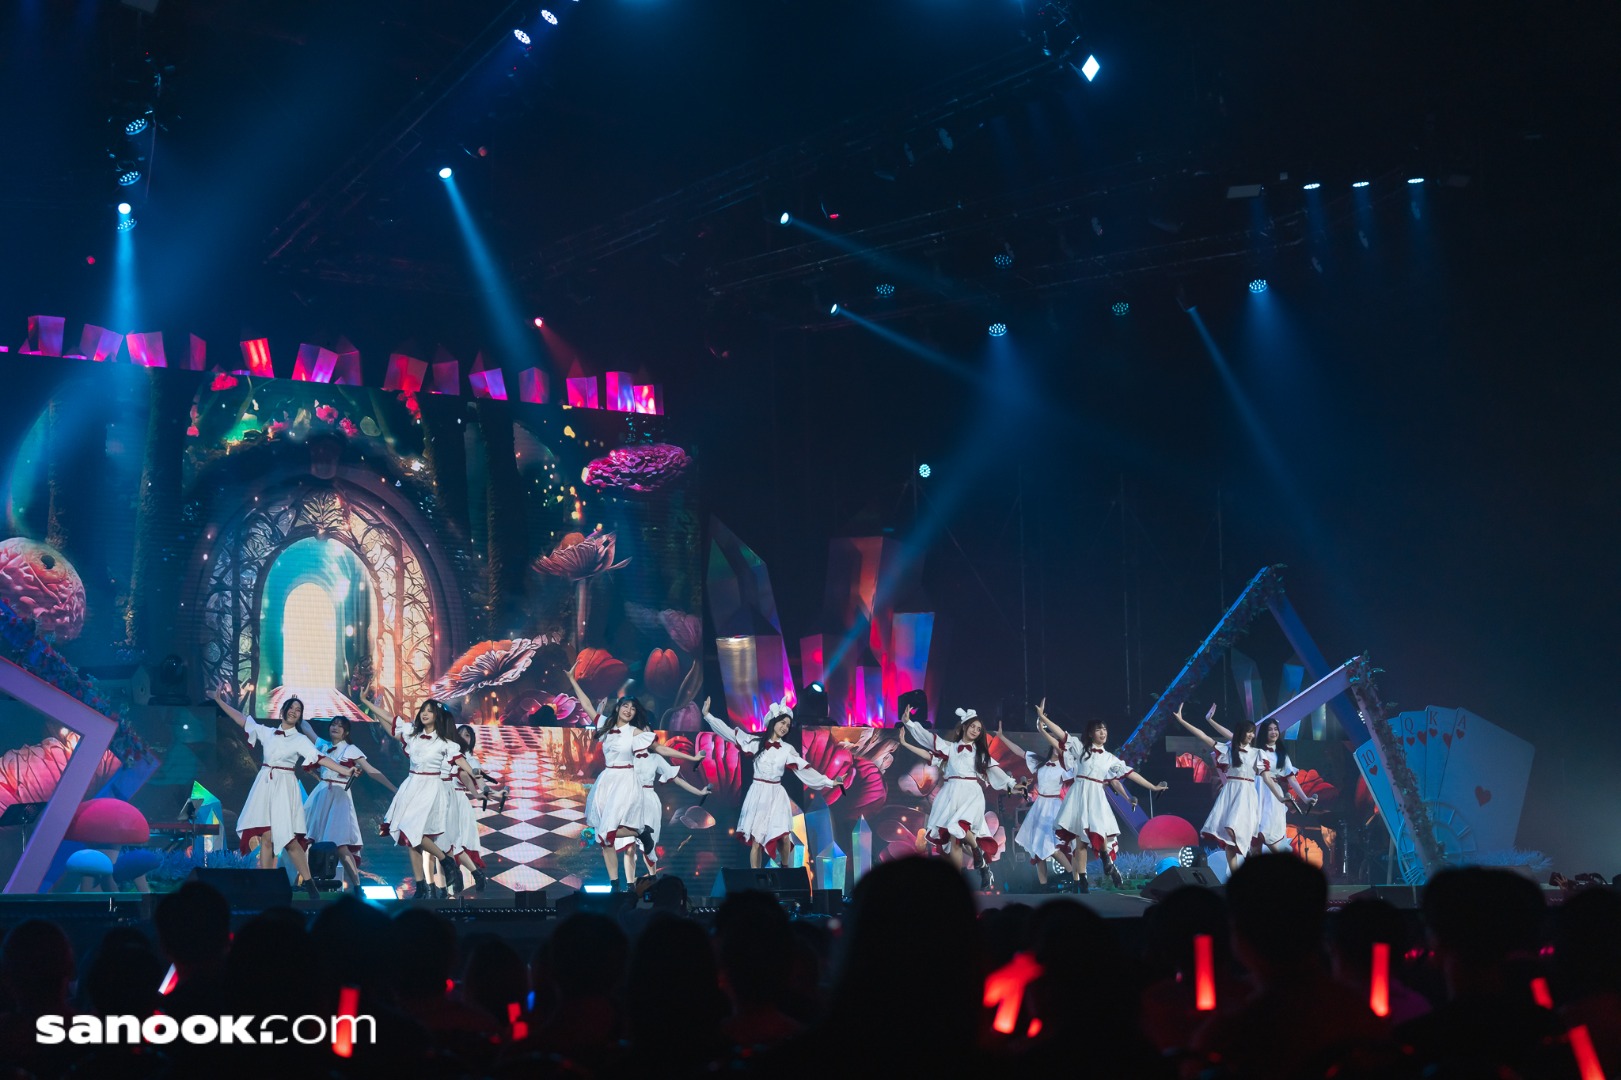 BNK48 3rd Generation Concert “Rabbit in Wonderland”